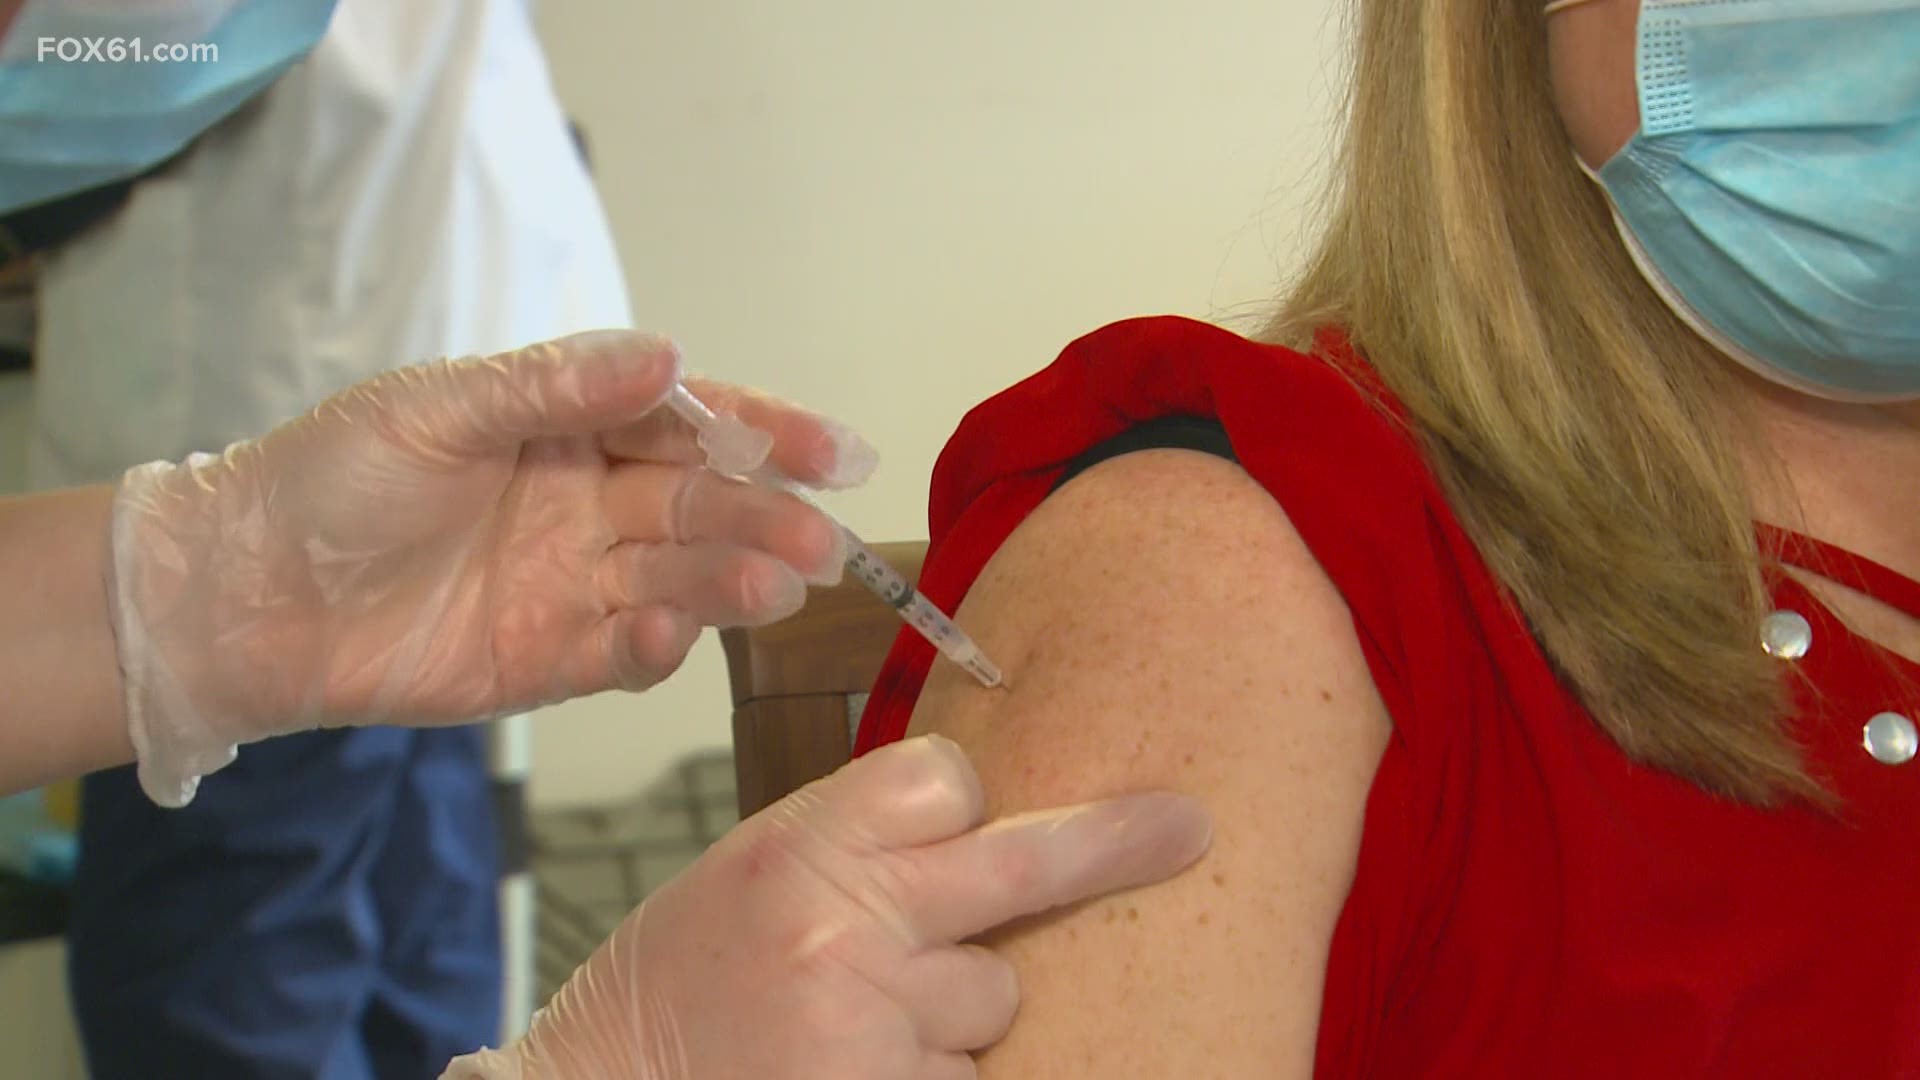 Residents appreciate getting the vaccine